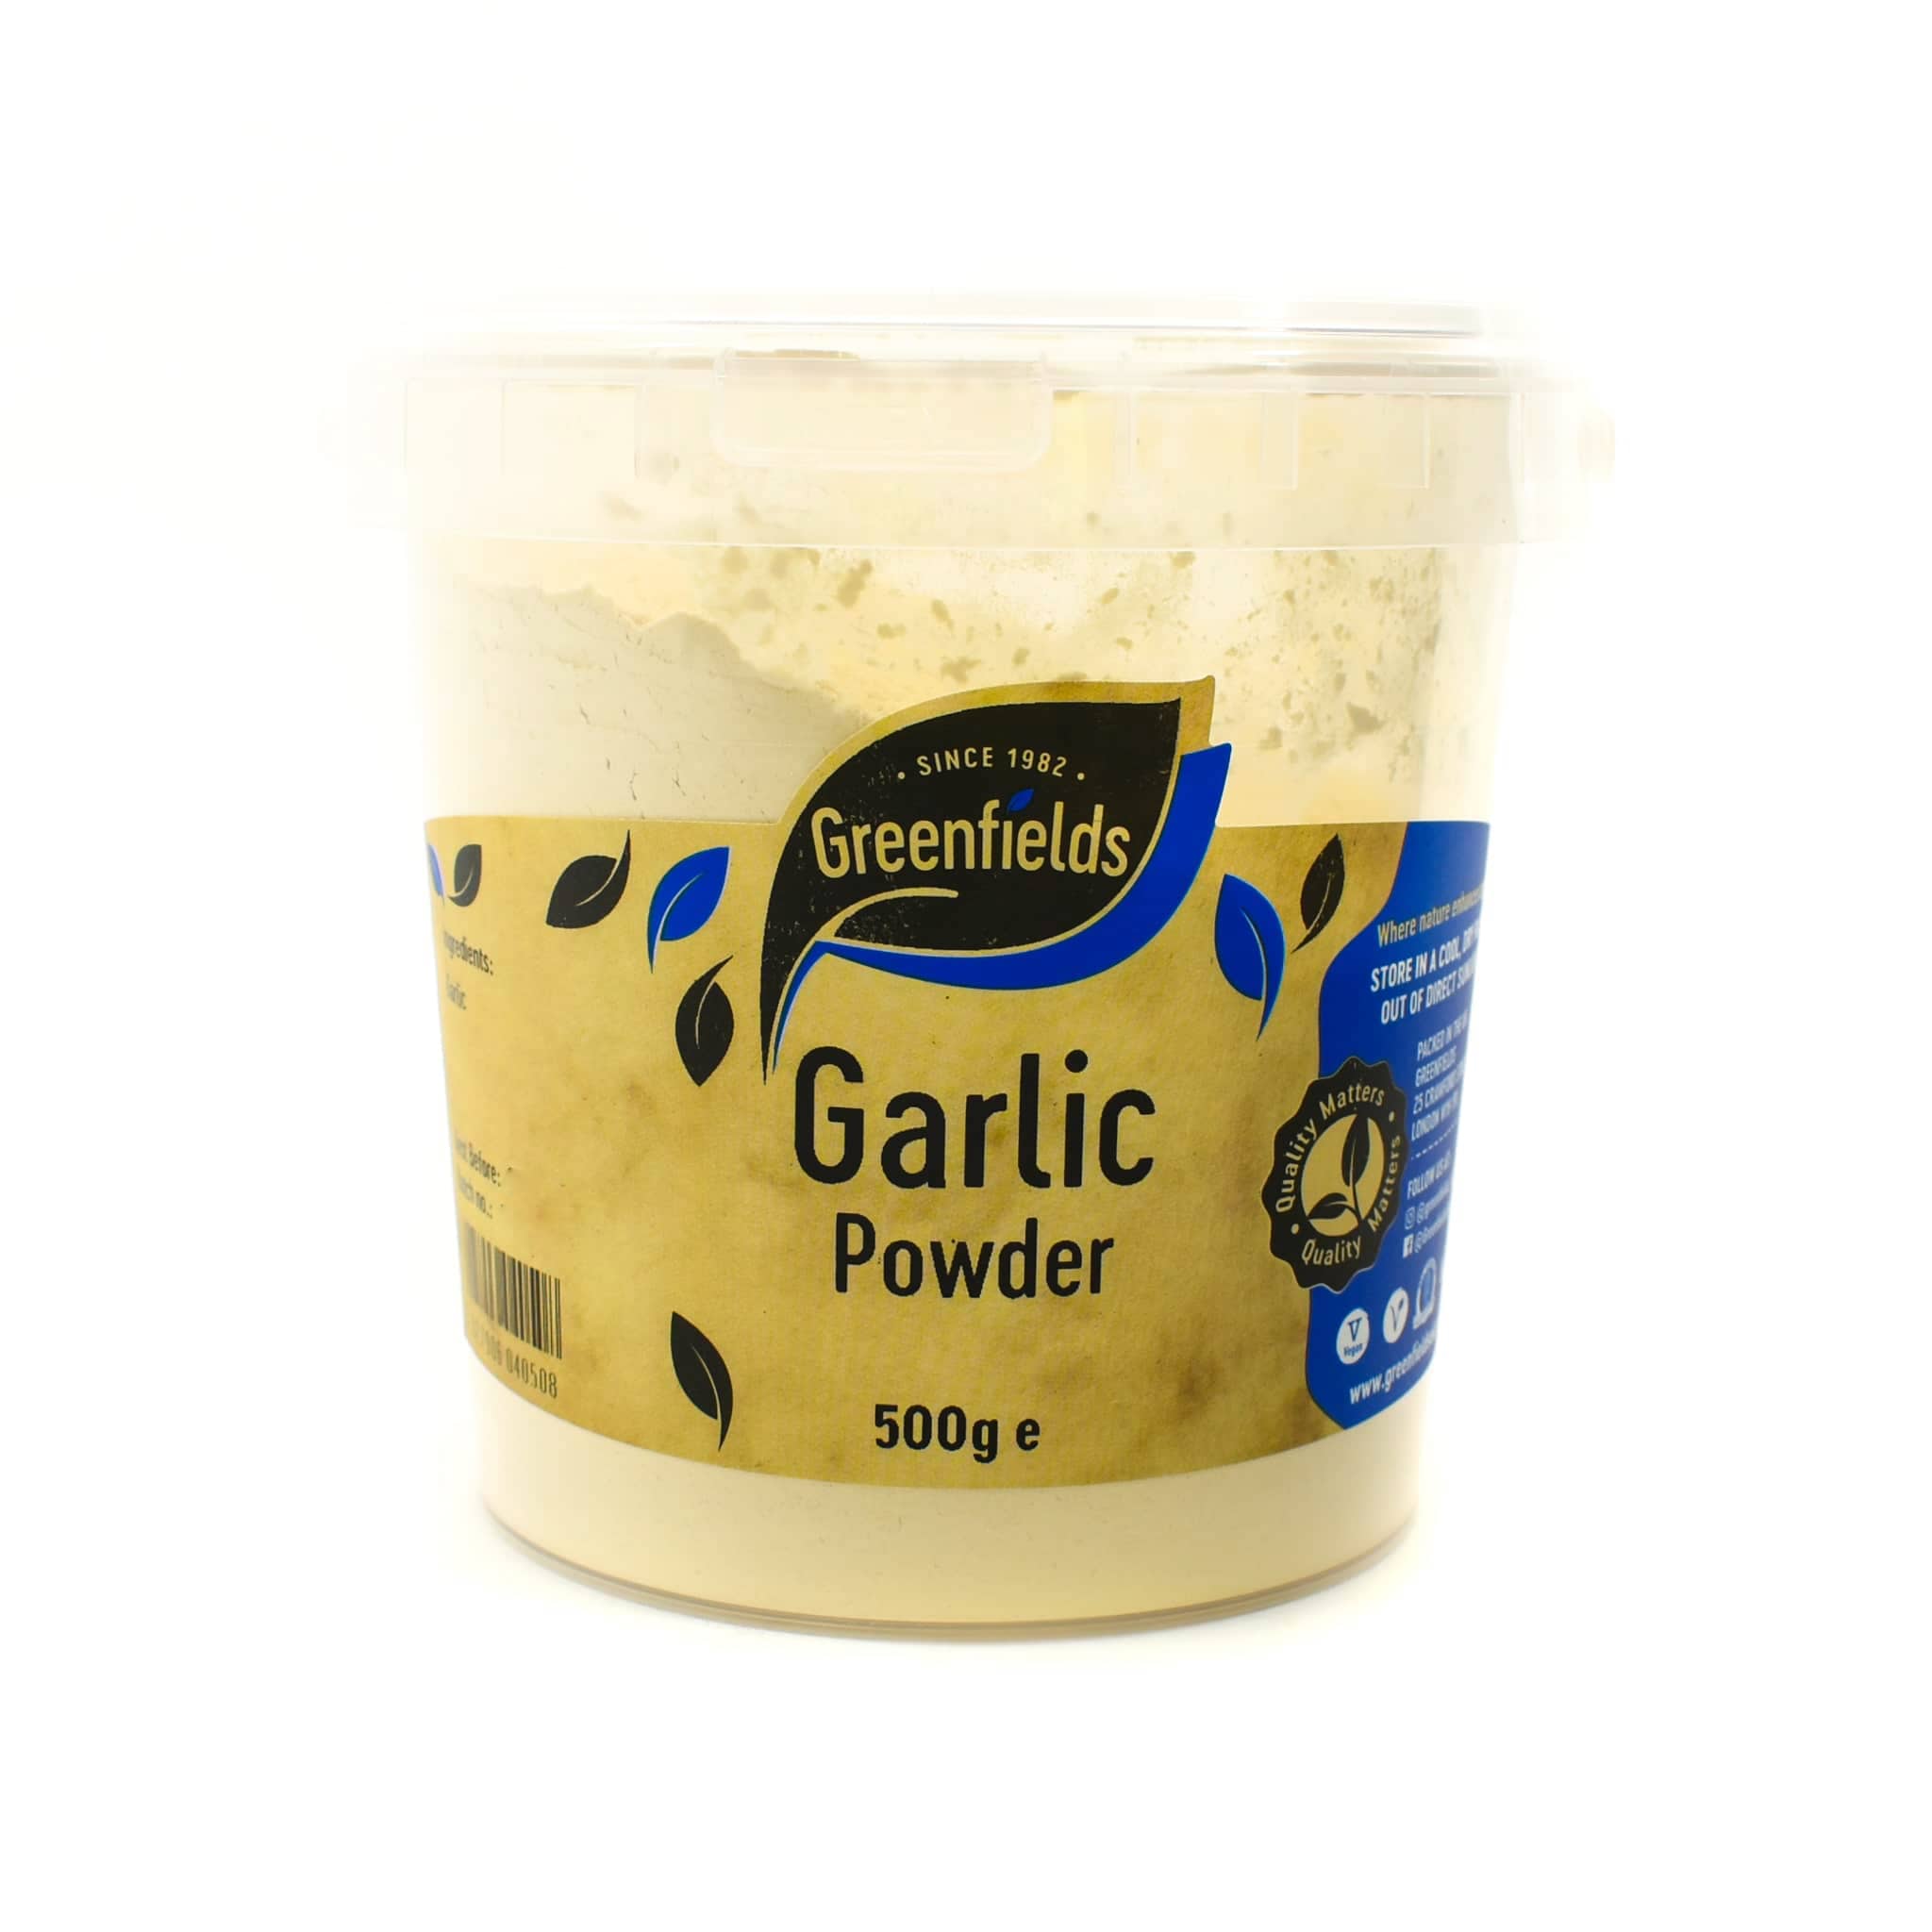 Greenfields Garlic Powder 500g